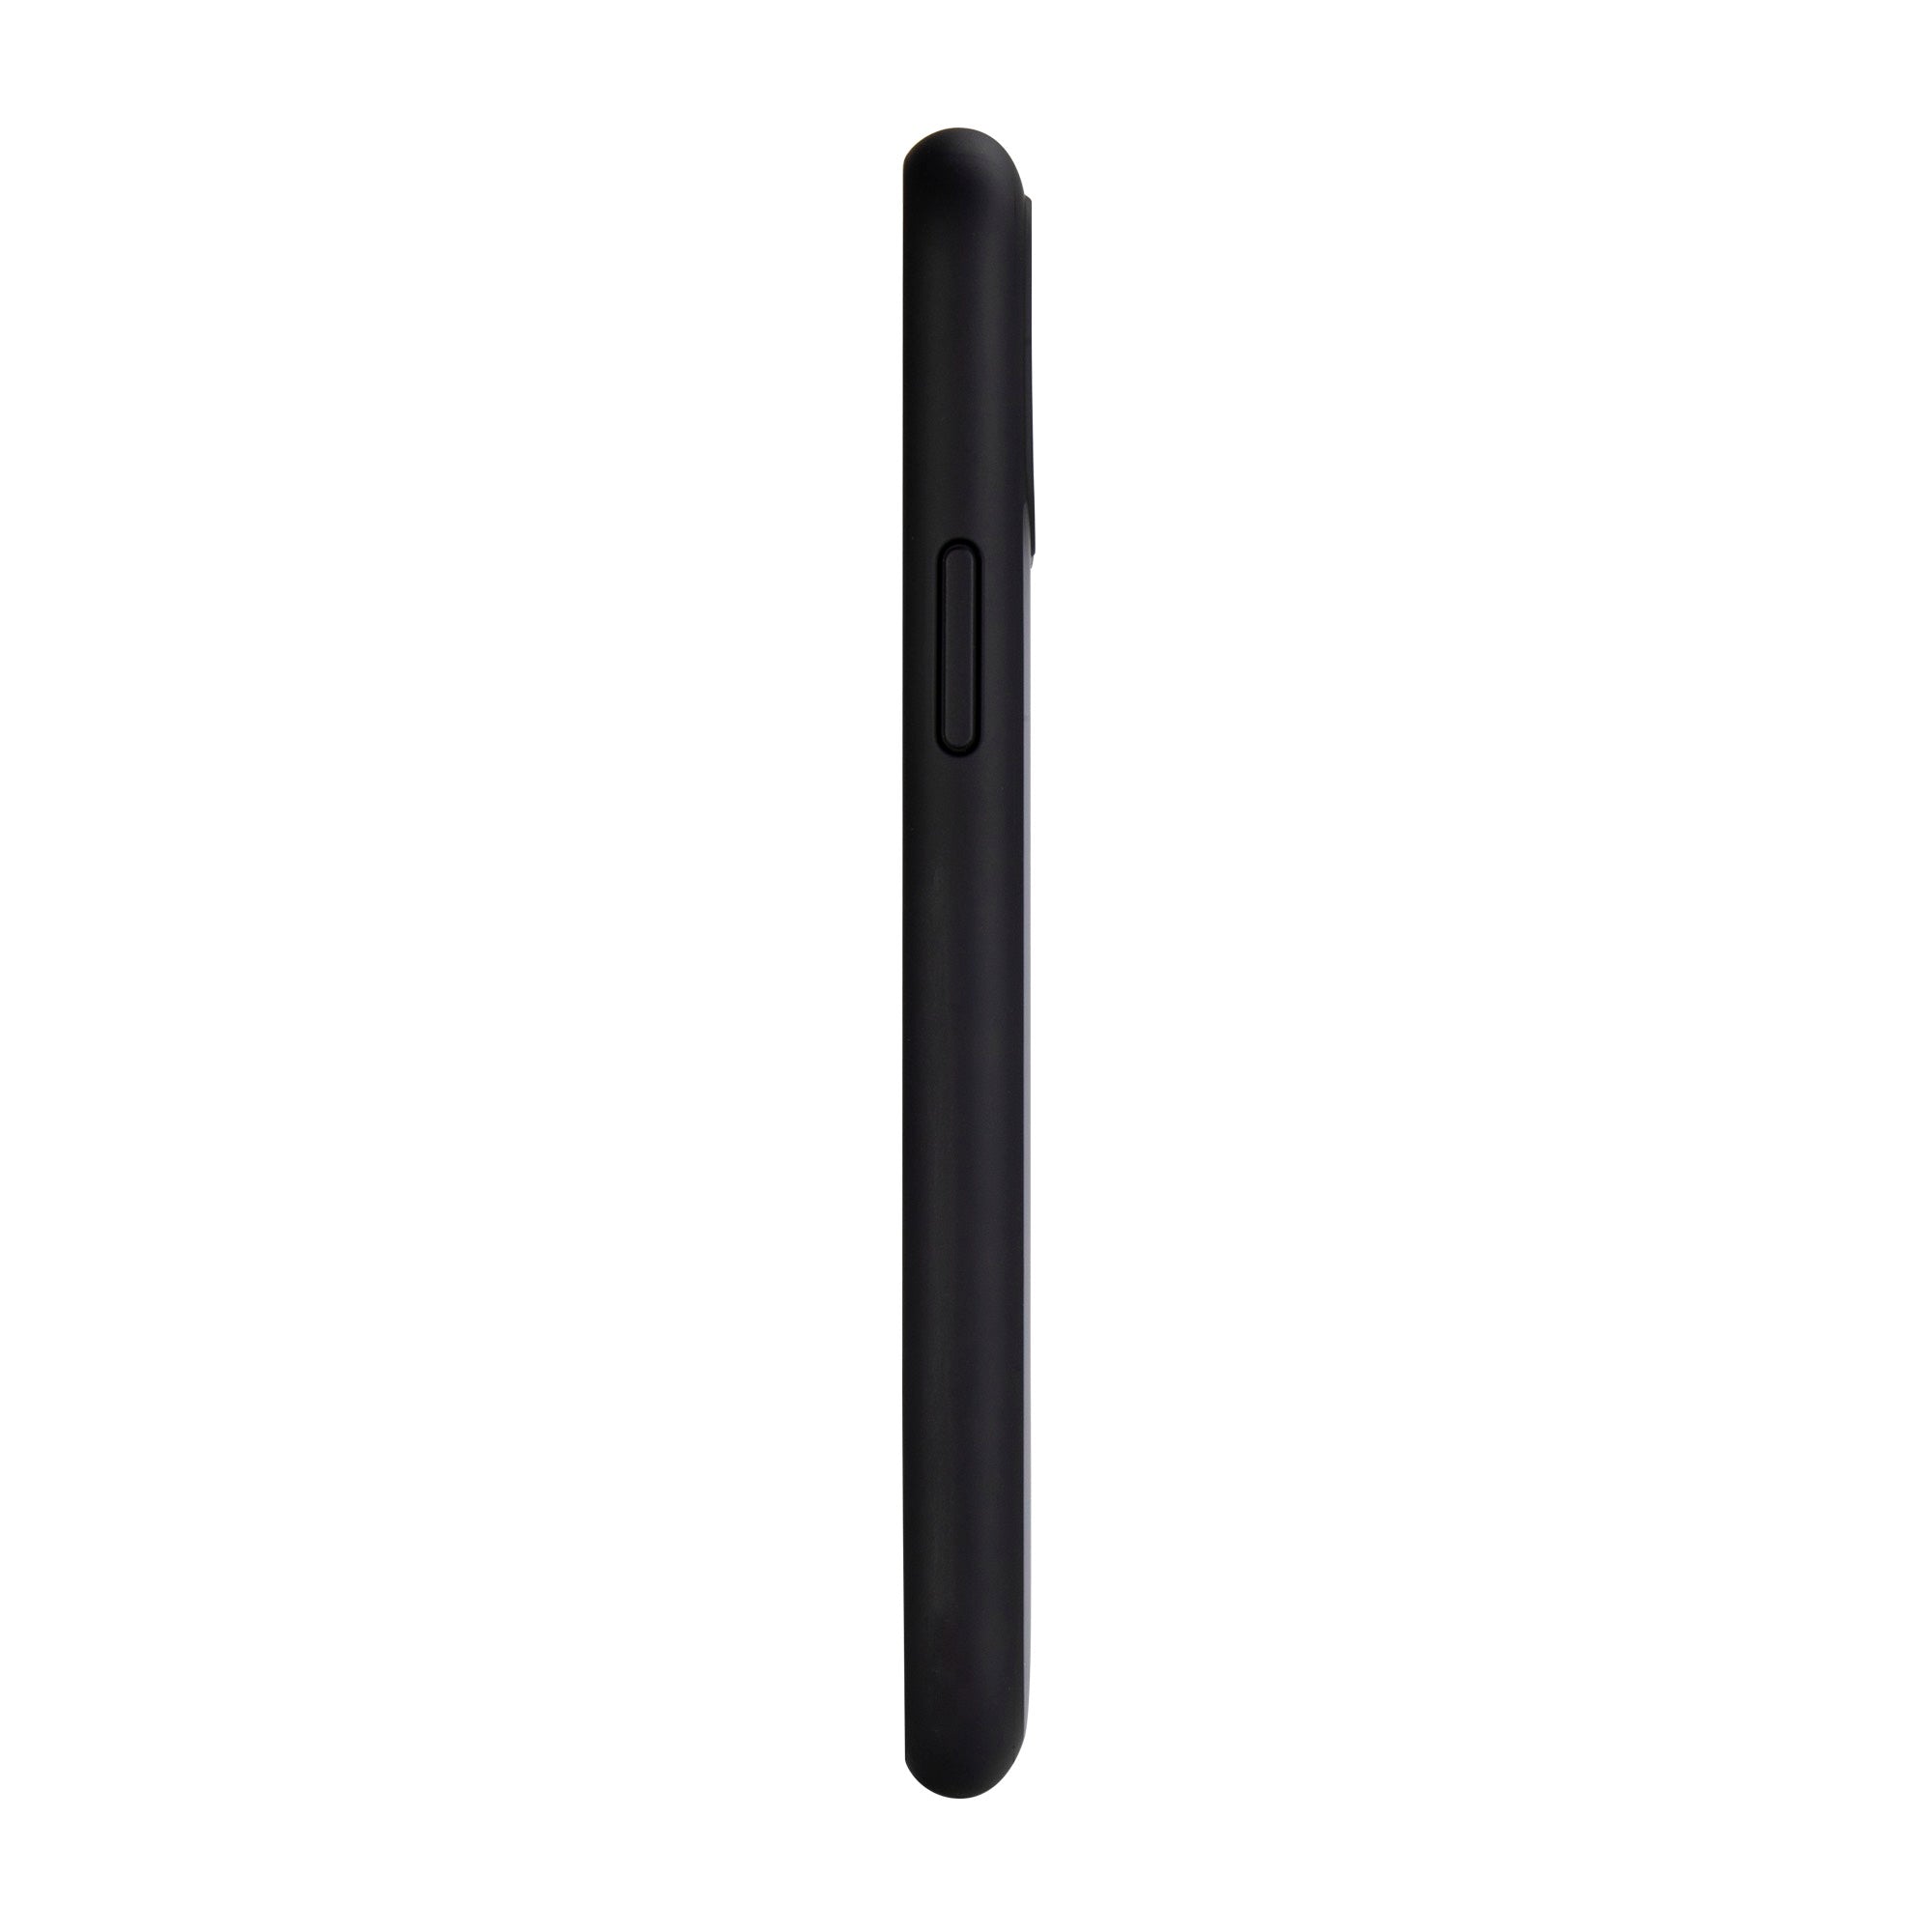 Aero iPhone 11 - Black